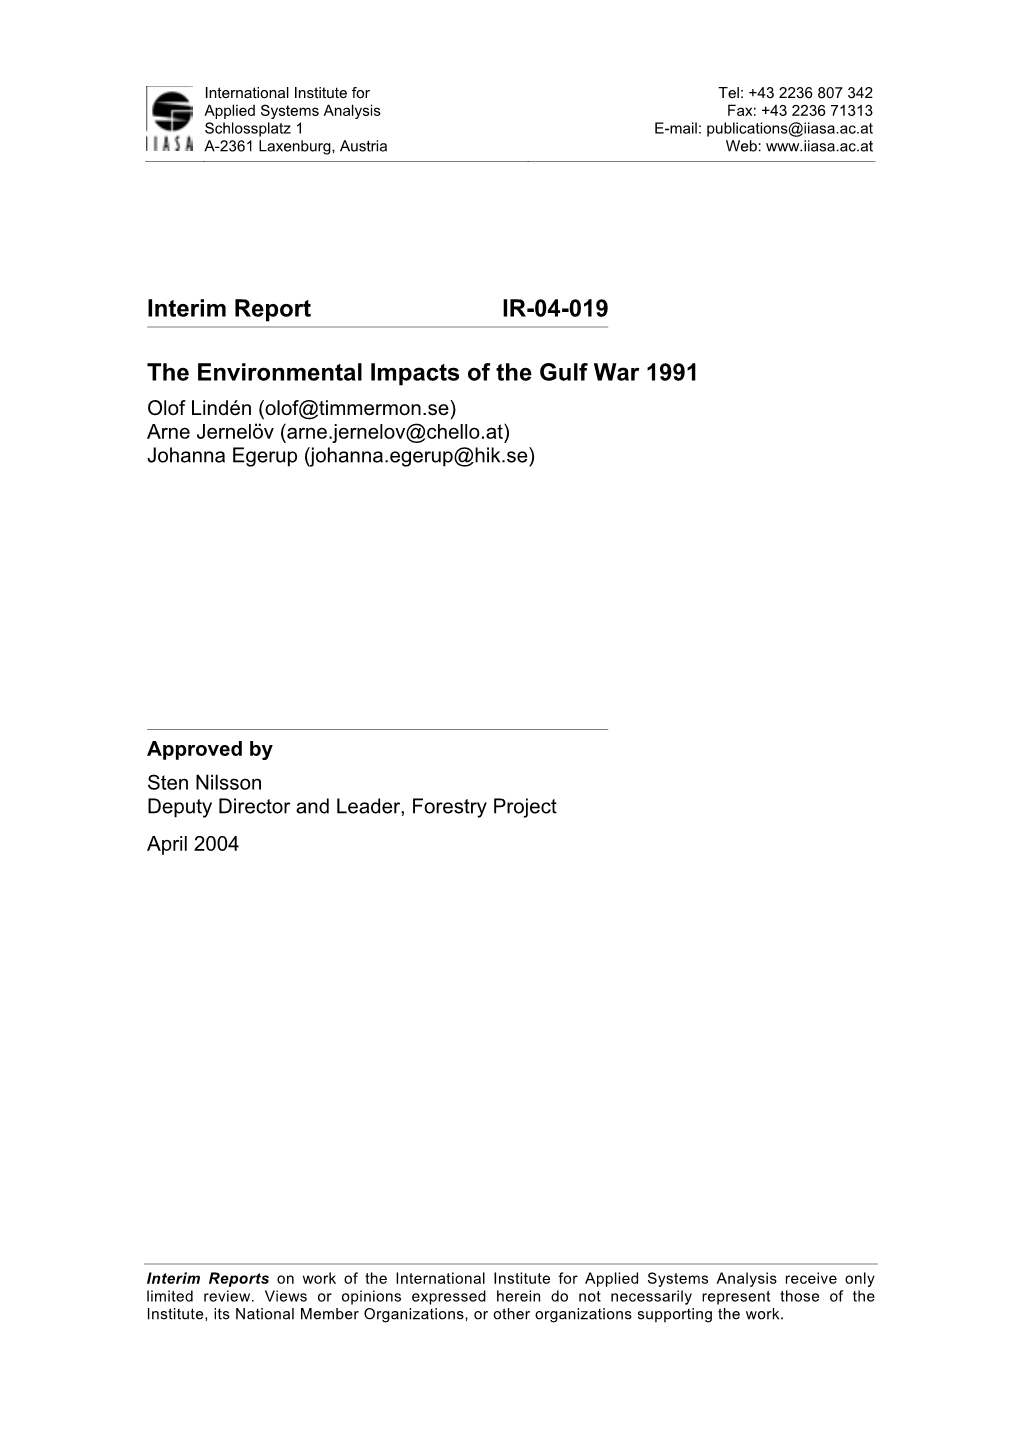 Interim Report IR-04-019 the Environmental Impacts of the Gulf